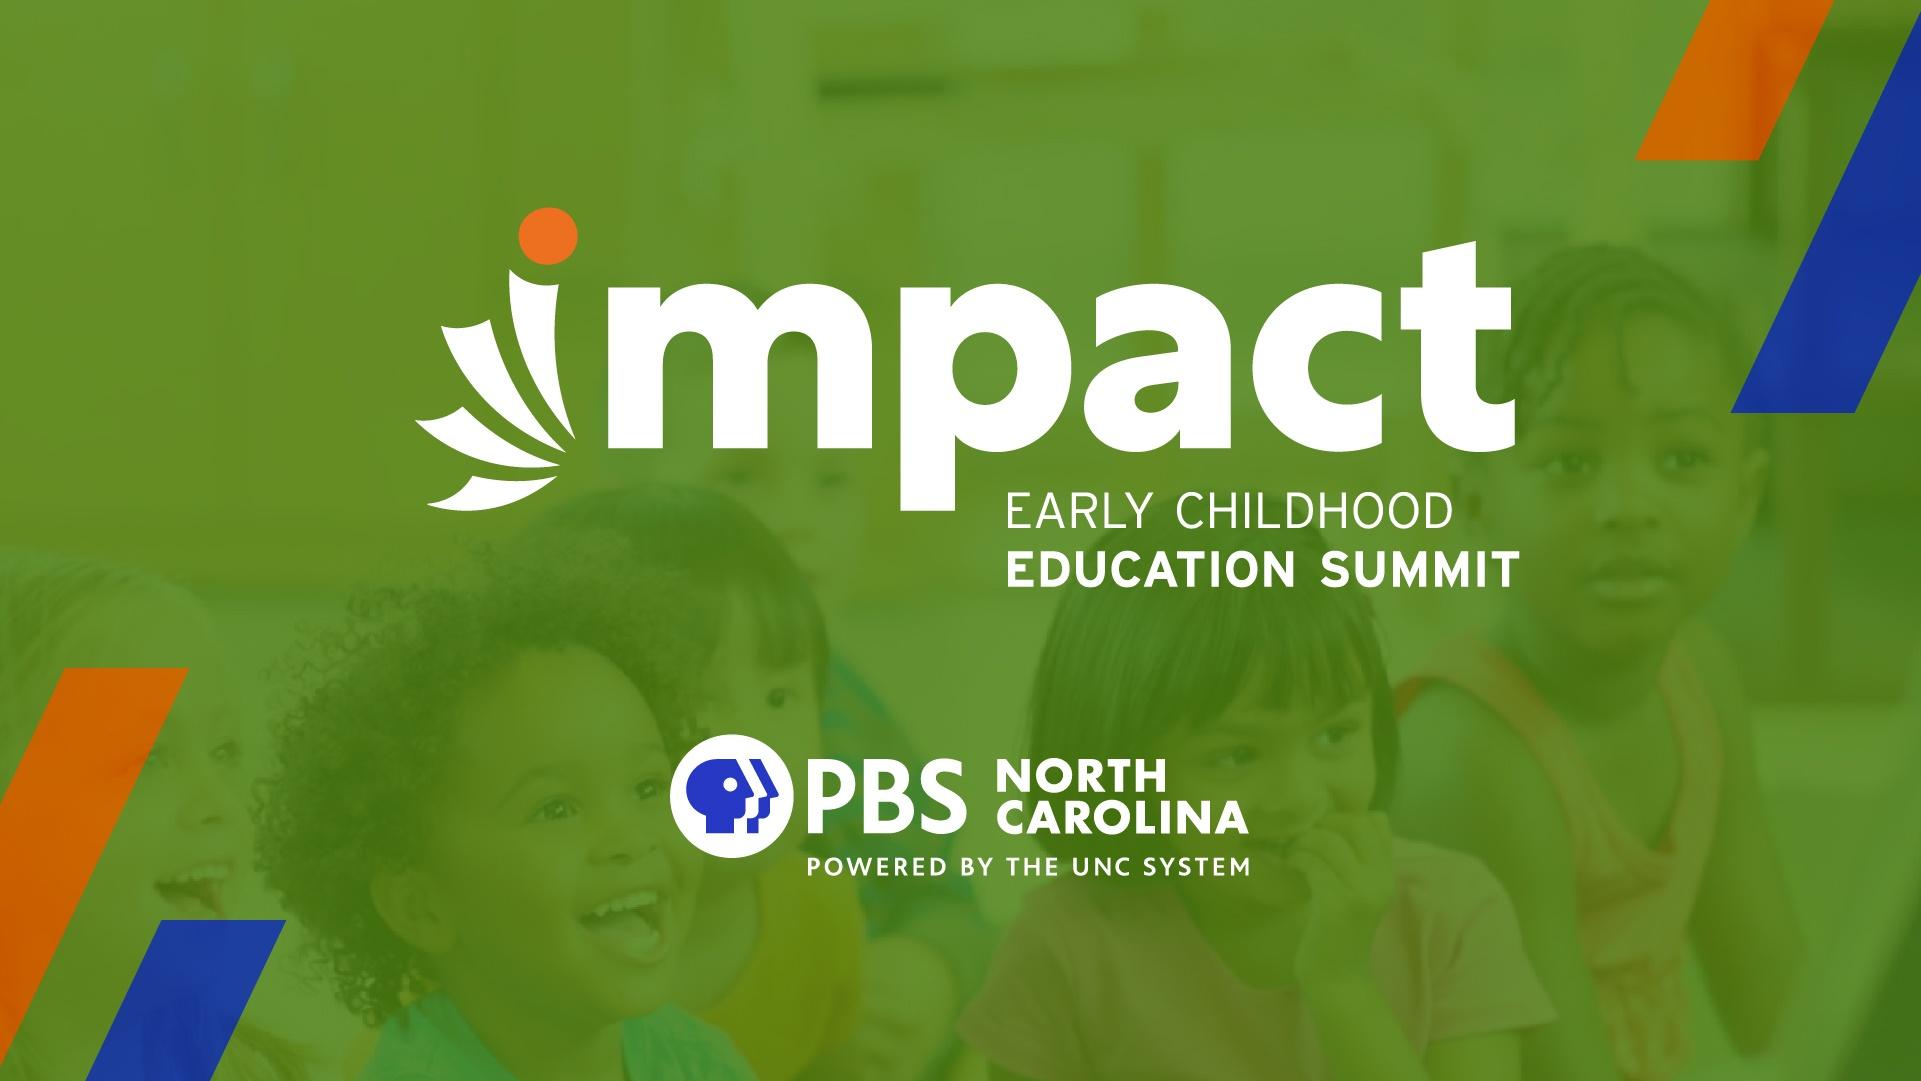 Impact Early Childhood Education Summit logo on green background 